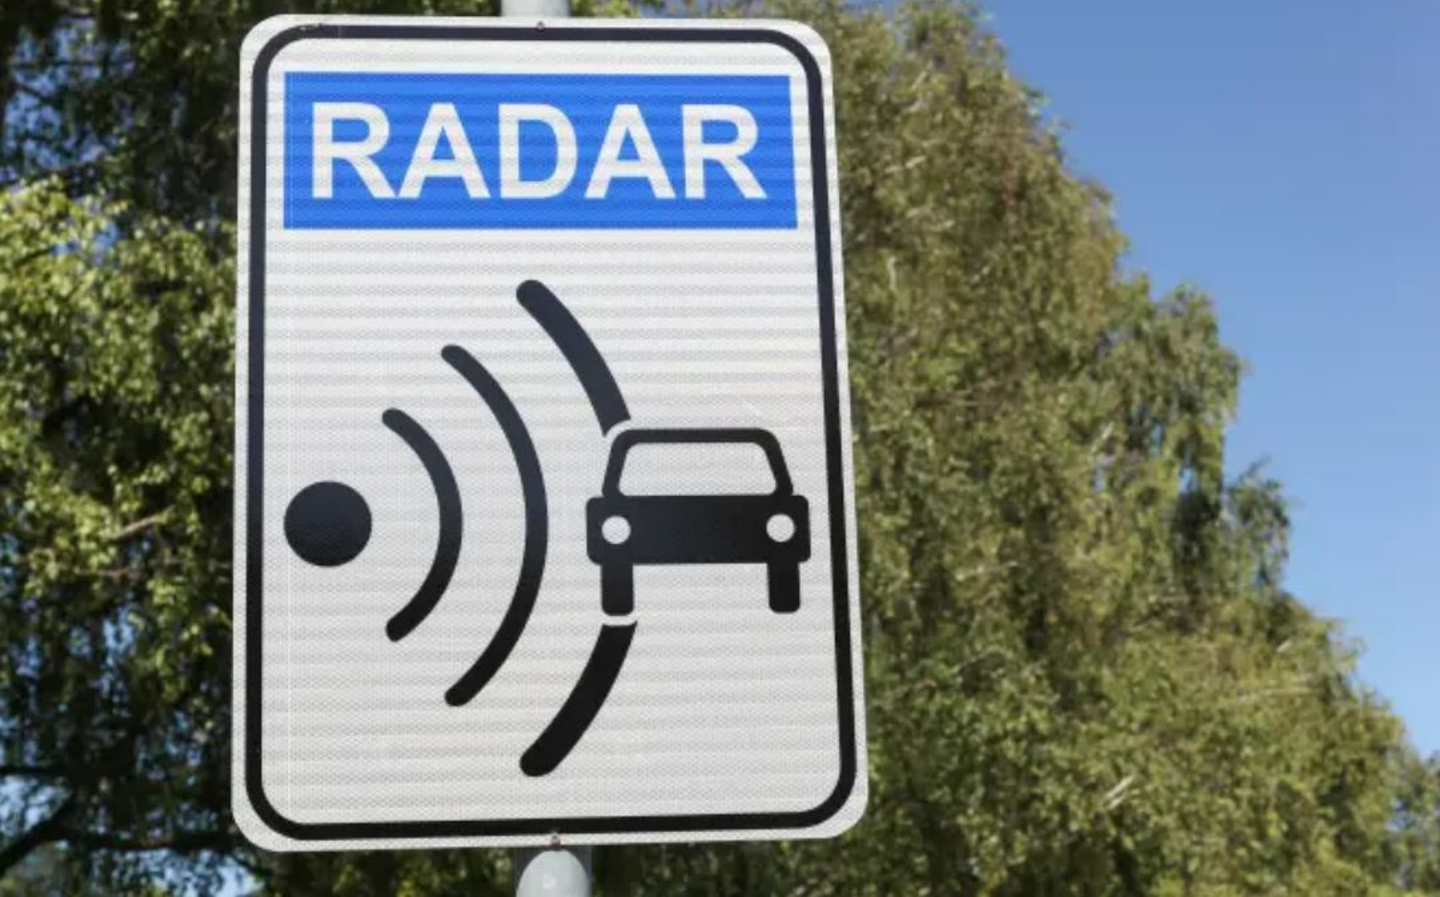 Reward traffic lights in France turn red for speeders